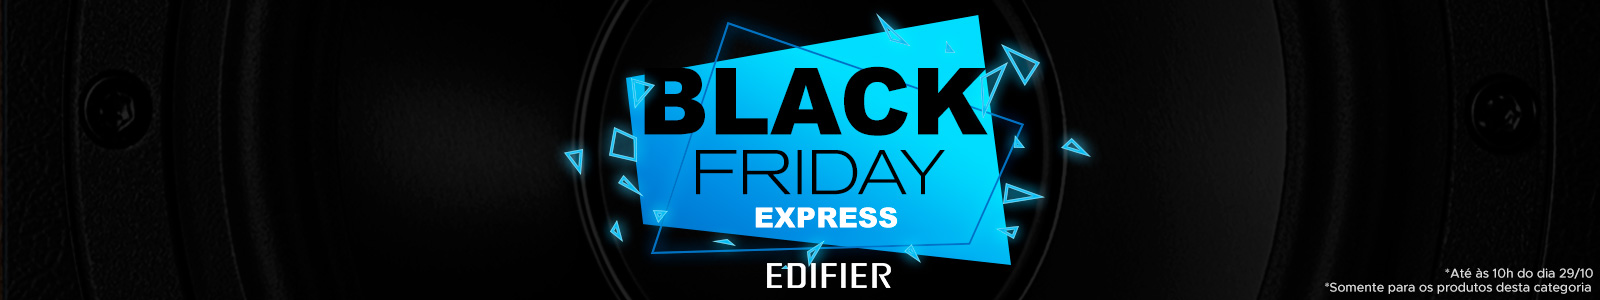 Black Friday Express